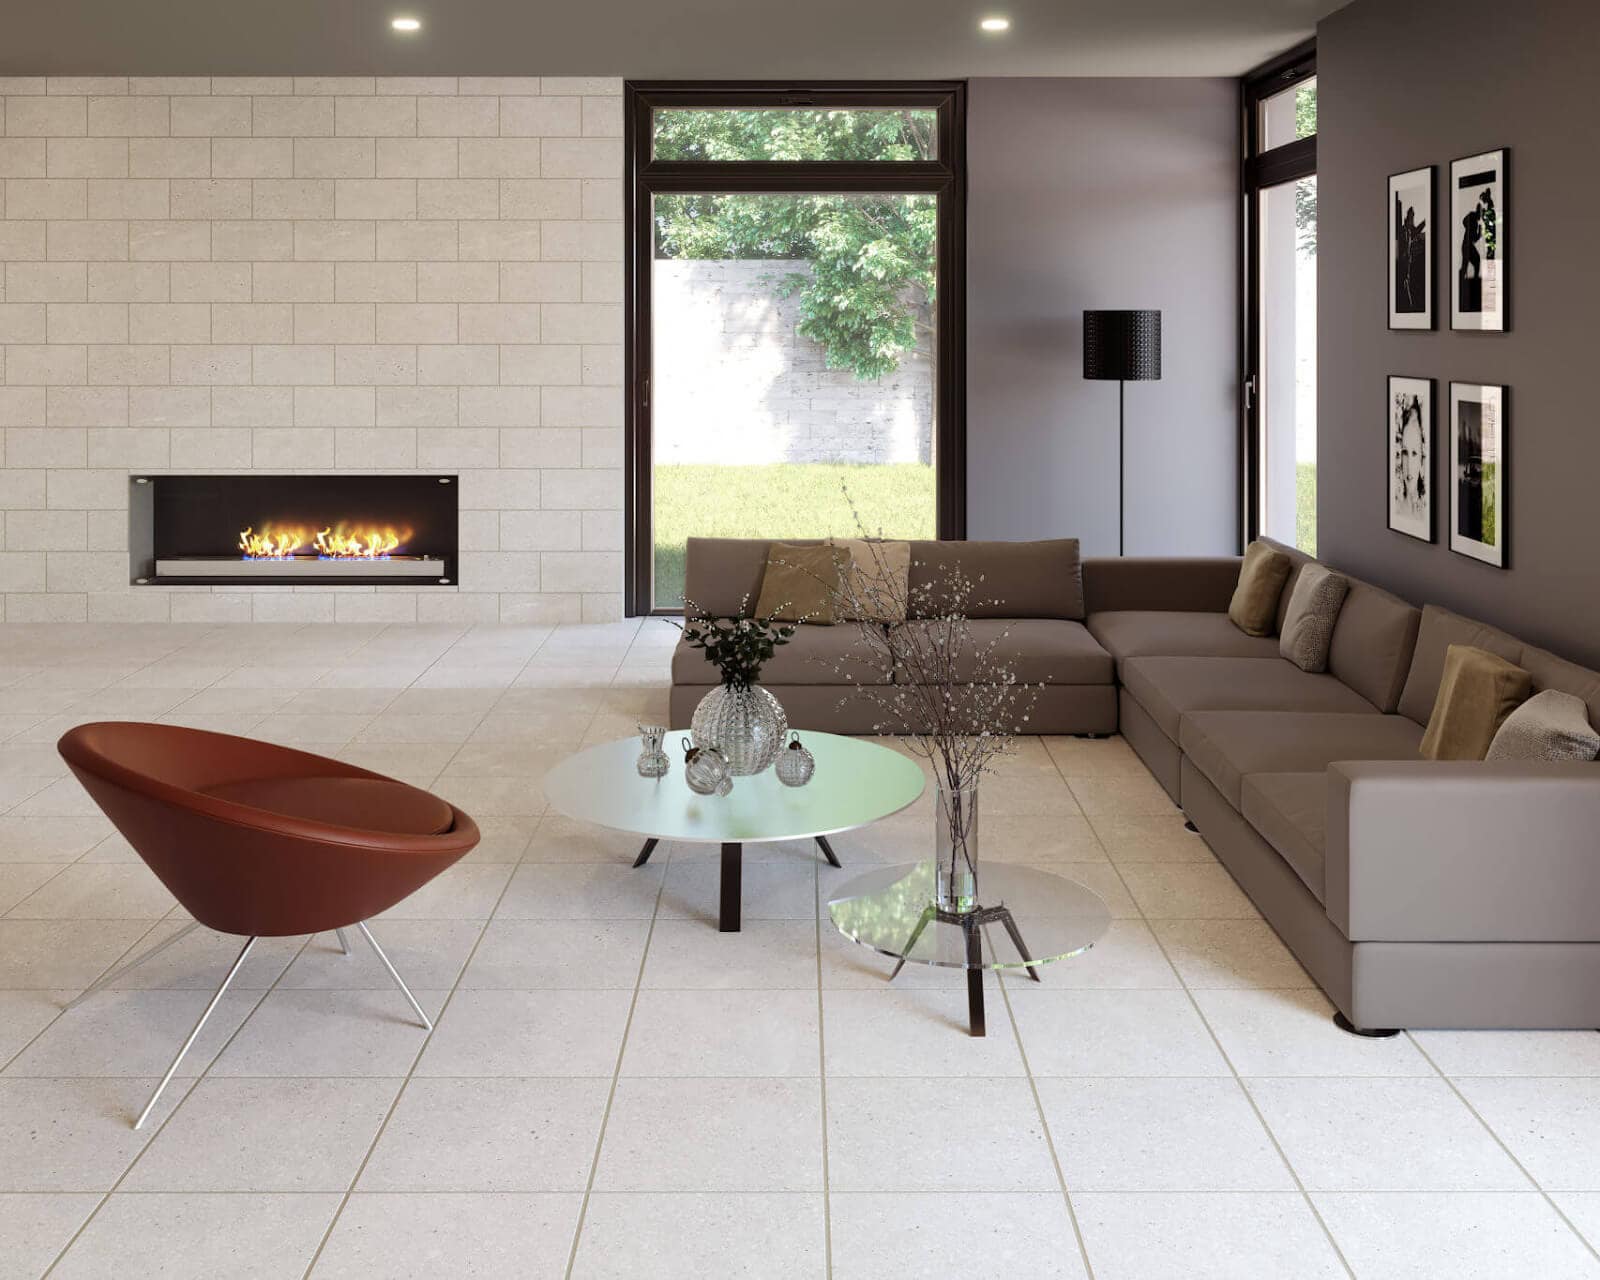 White square tile flooring in a living room